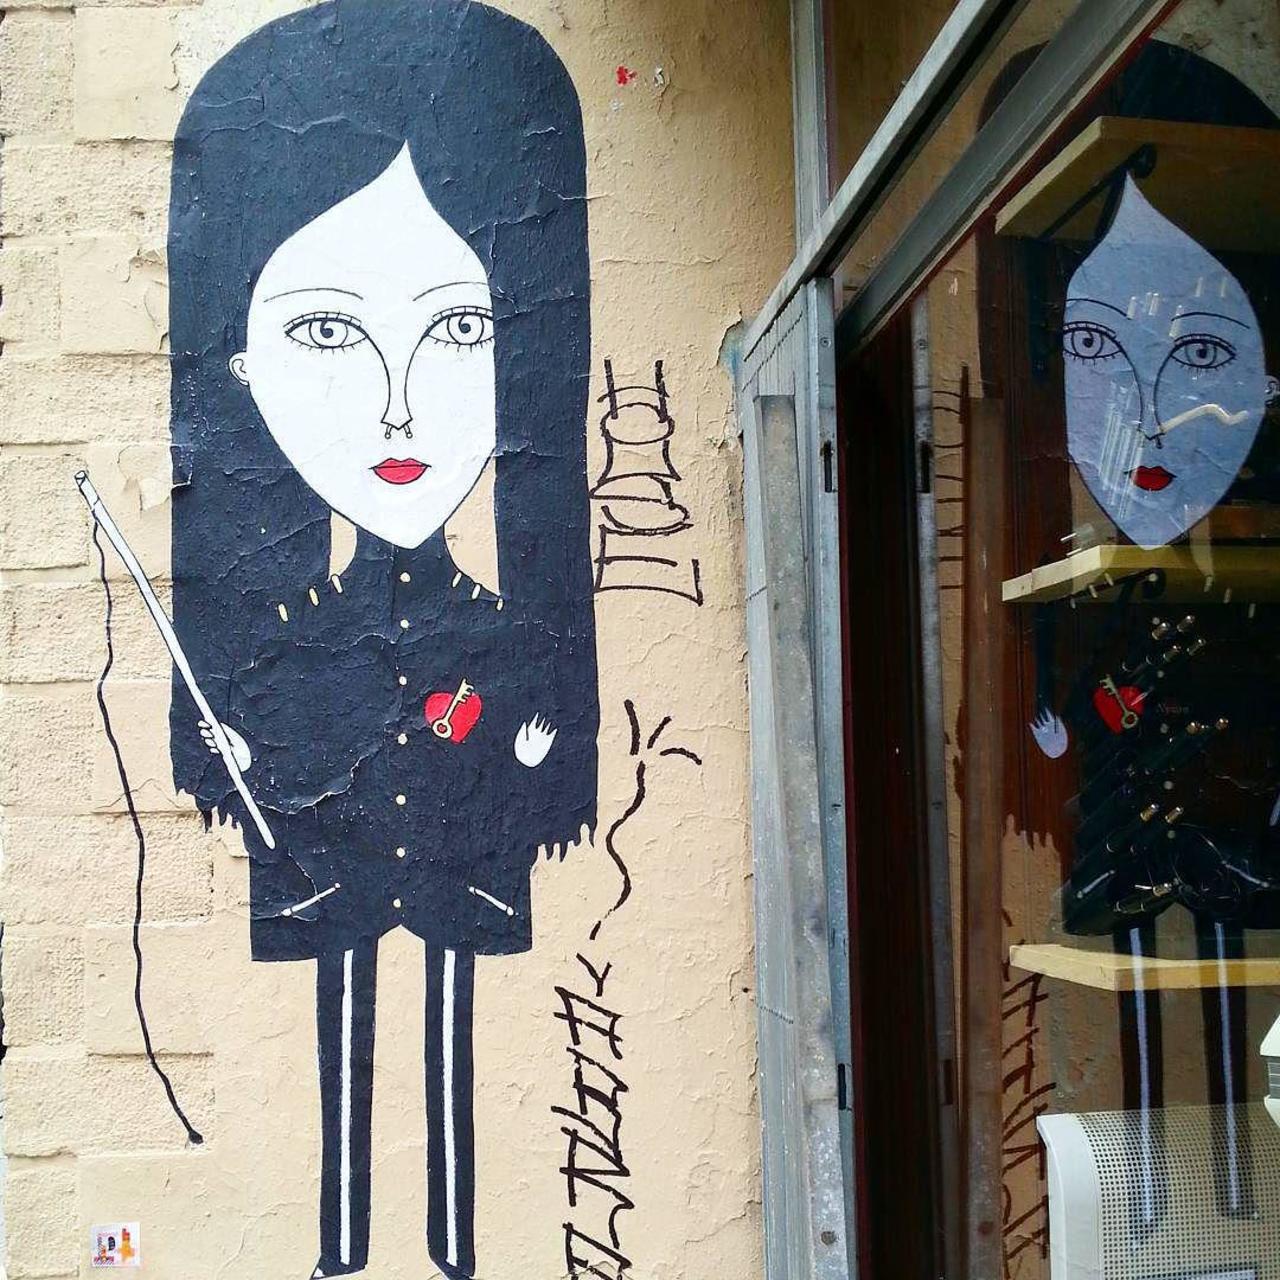 #Paris #graffiti photo by @fotoflaneuse http://ift.tt/1FUidaE #StreetArt http://t.co/fgTX9x59Nv